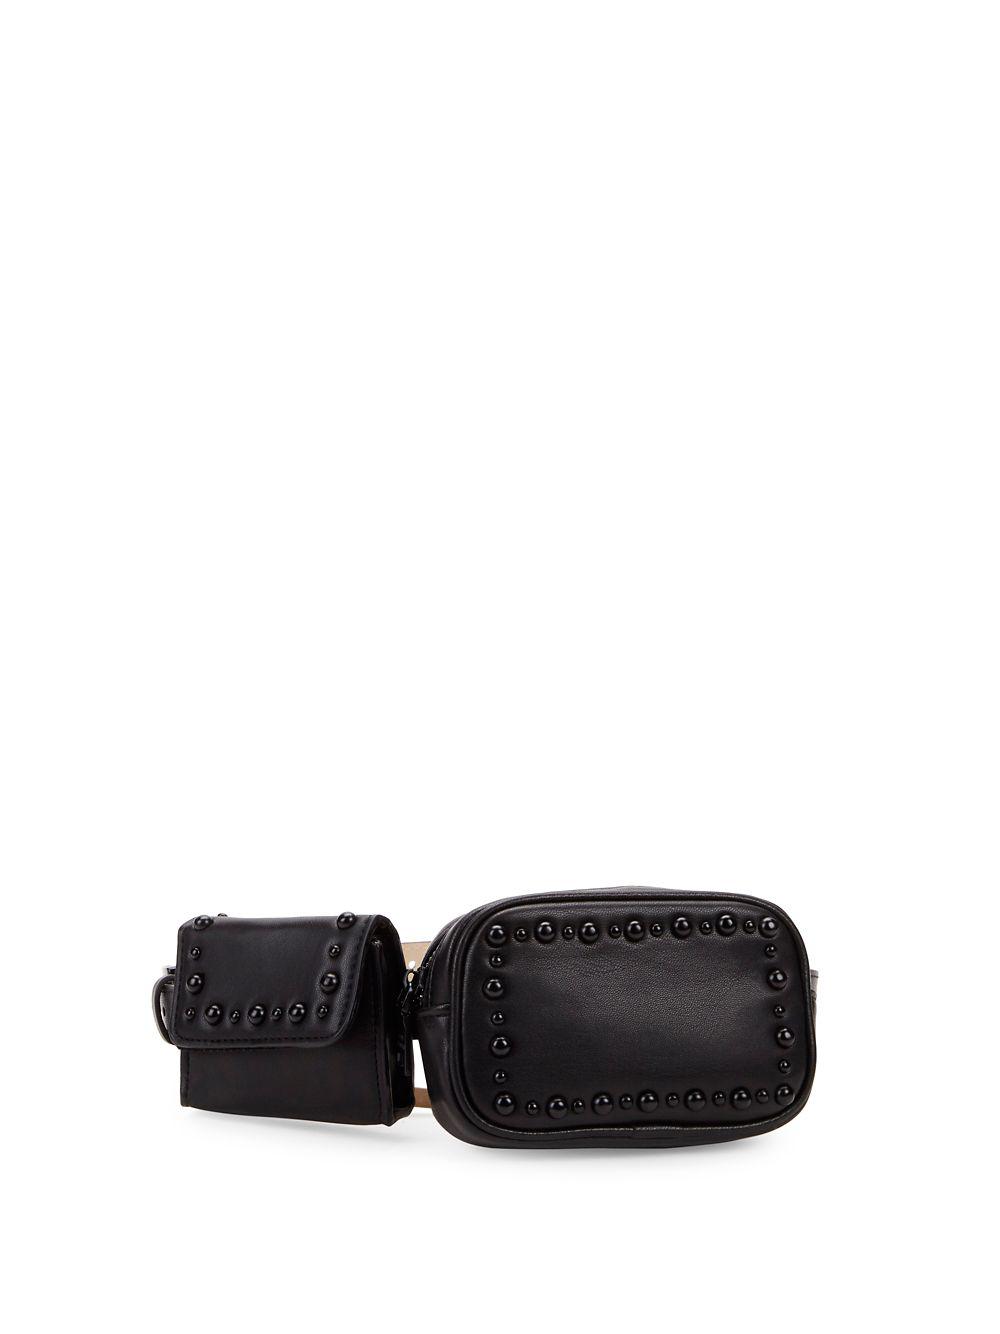 Steve Madden Double Pouch Faux-leather Belt Bag in Black - Lyst